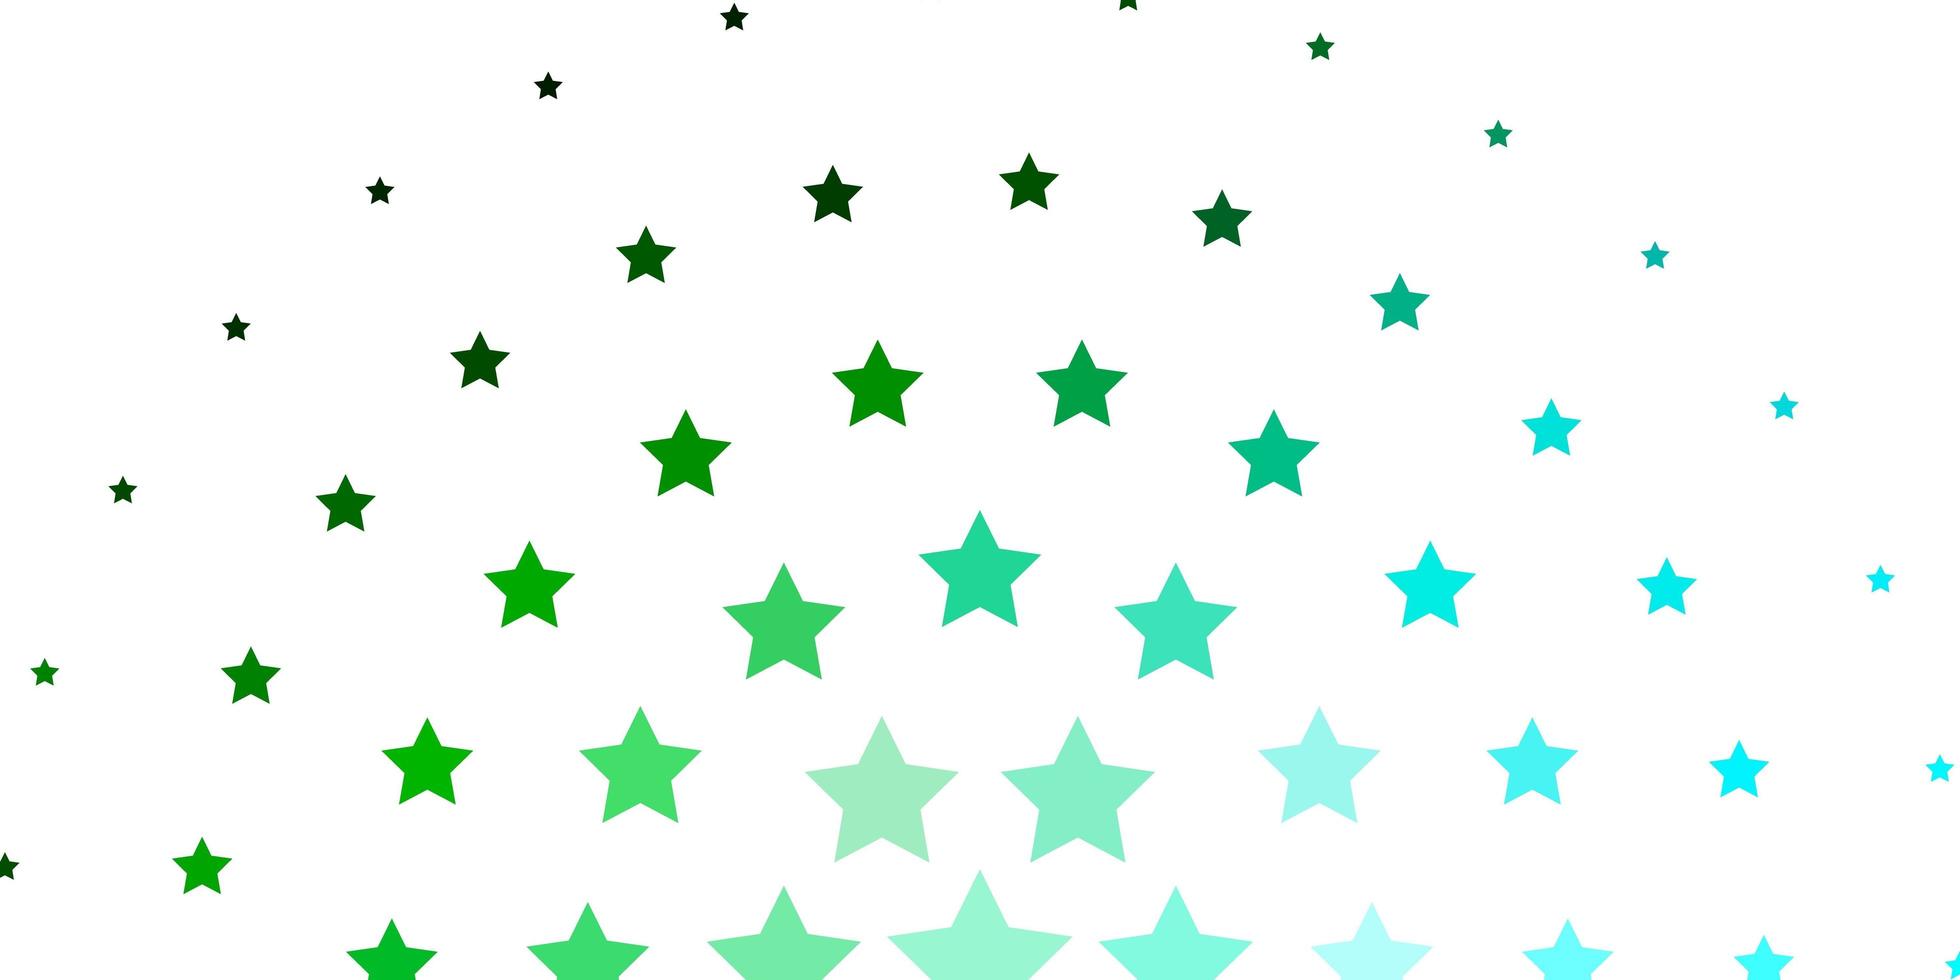 textura vector azul e verde claro com belas estrelas.